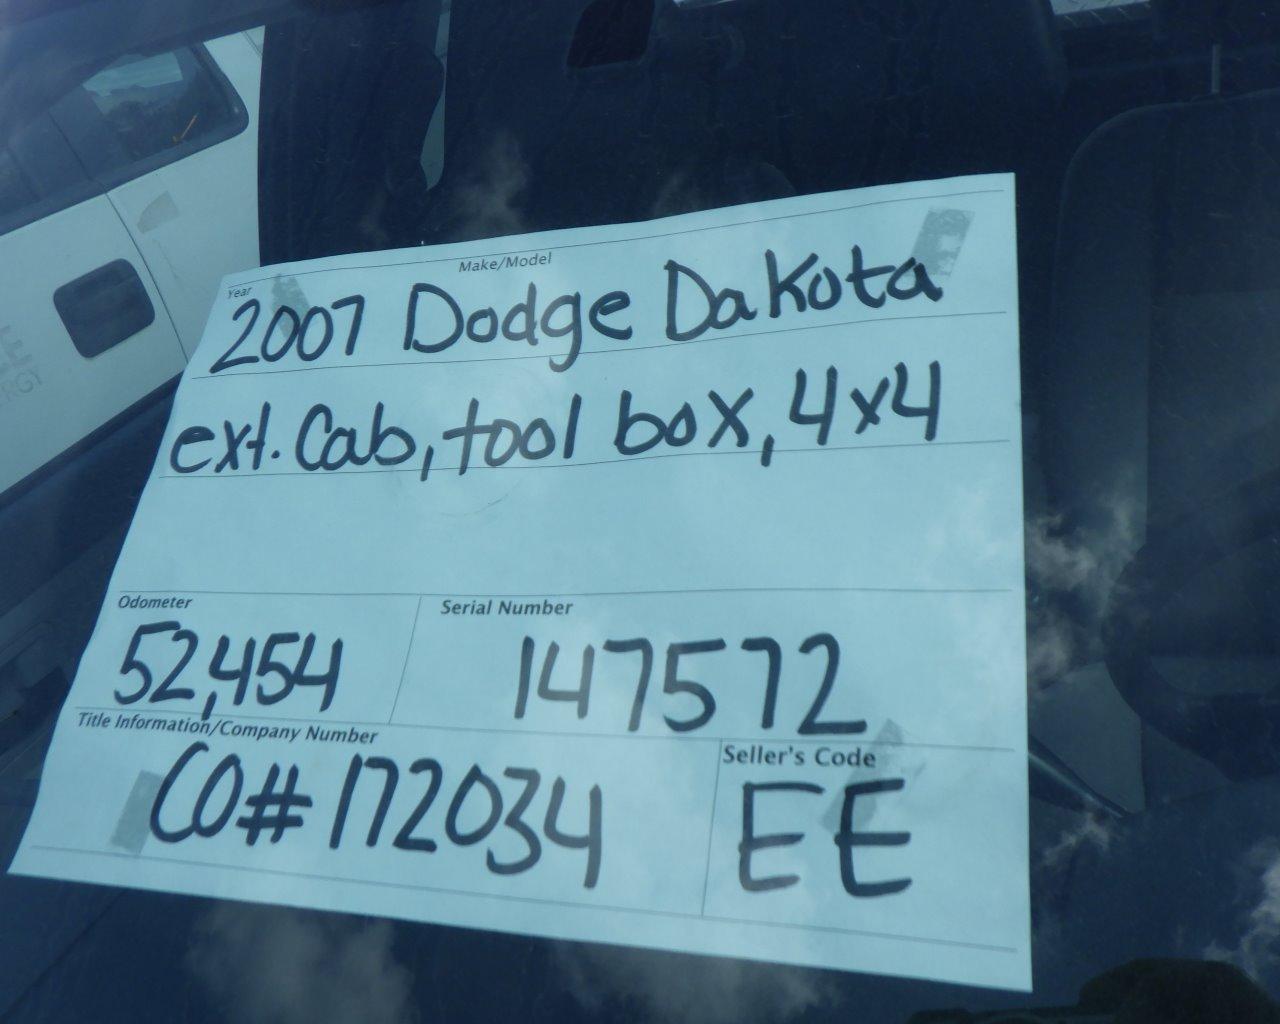 2007 DODGE Dakota Ext Cab   Tool Box   4x4 s/n:147572